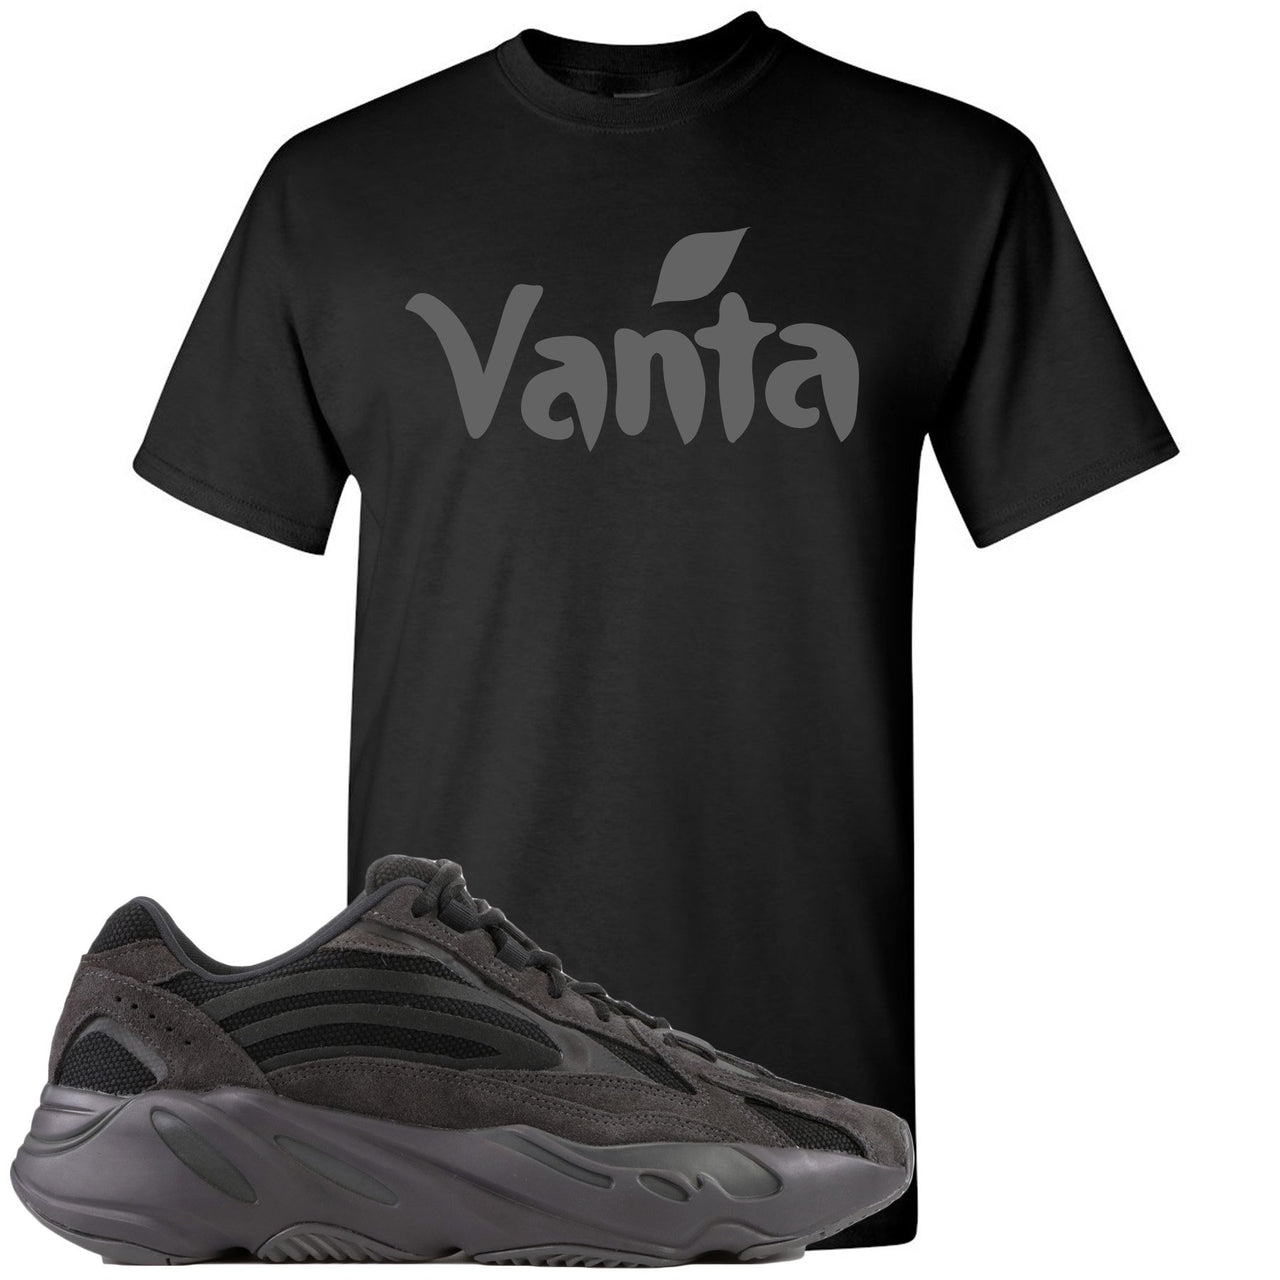 Vanta v2 700s T Shirt | Vanta, Black